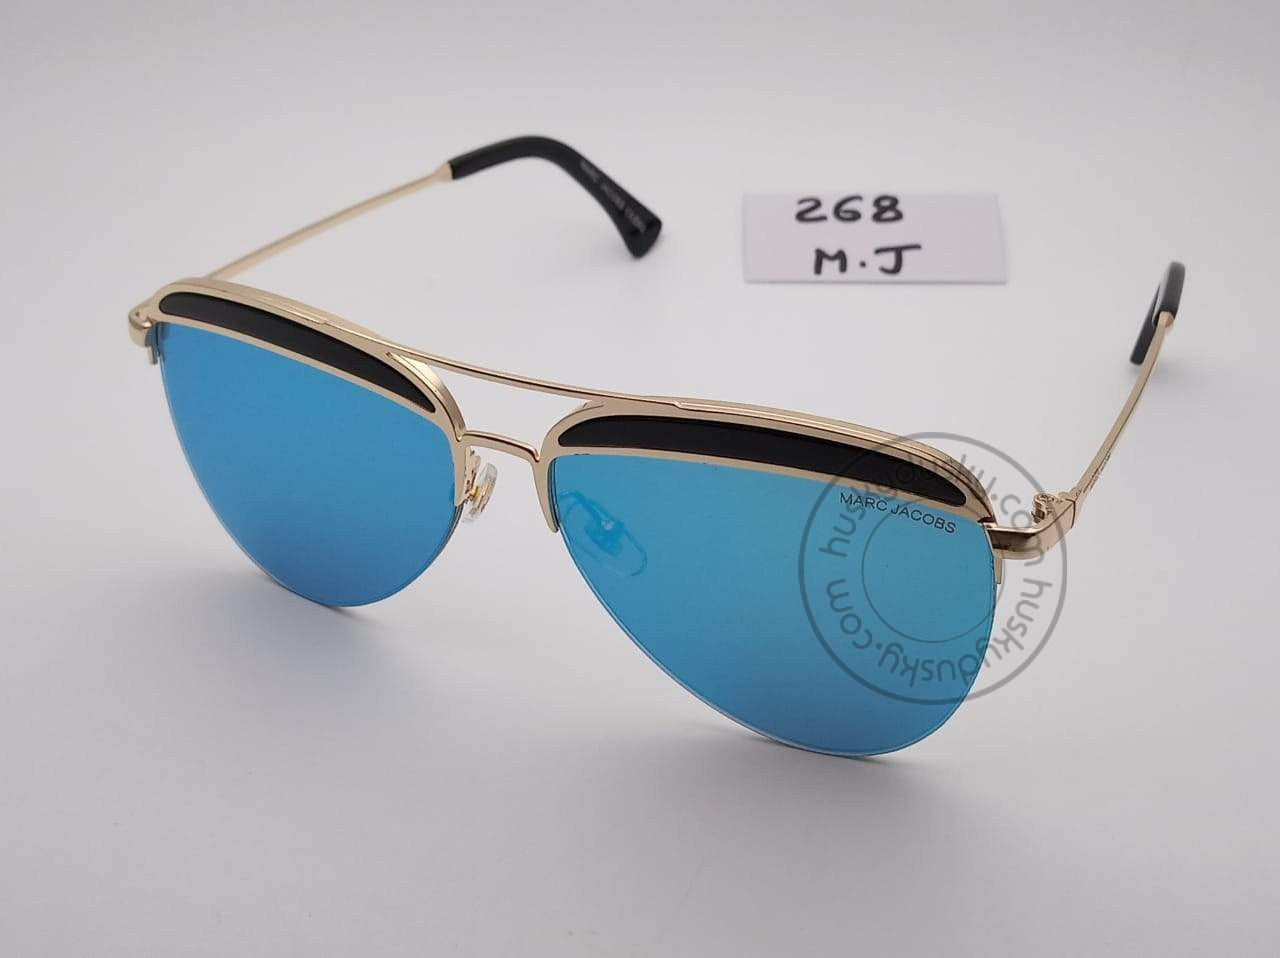 Marc Jacobs Branded Ocean Blue Glass Men's Sunglass For Man MJ-44 Black&Gold Stick&Frame Gift Sunglass